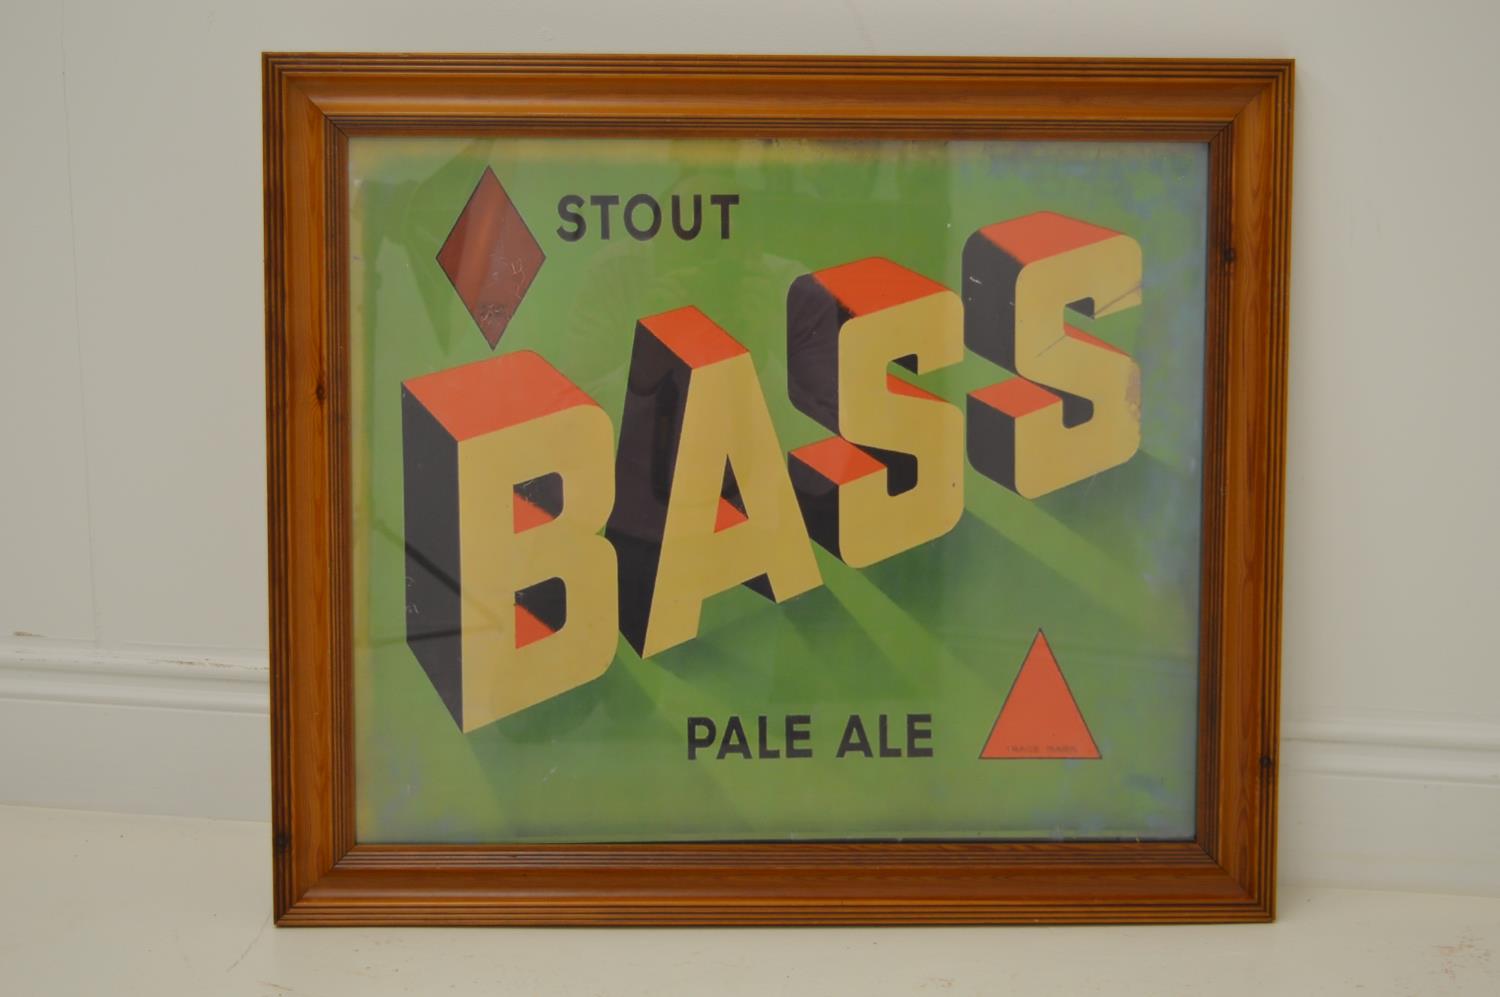 Stout Bass Pale Ale advertising print.